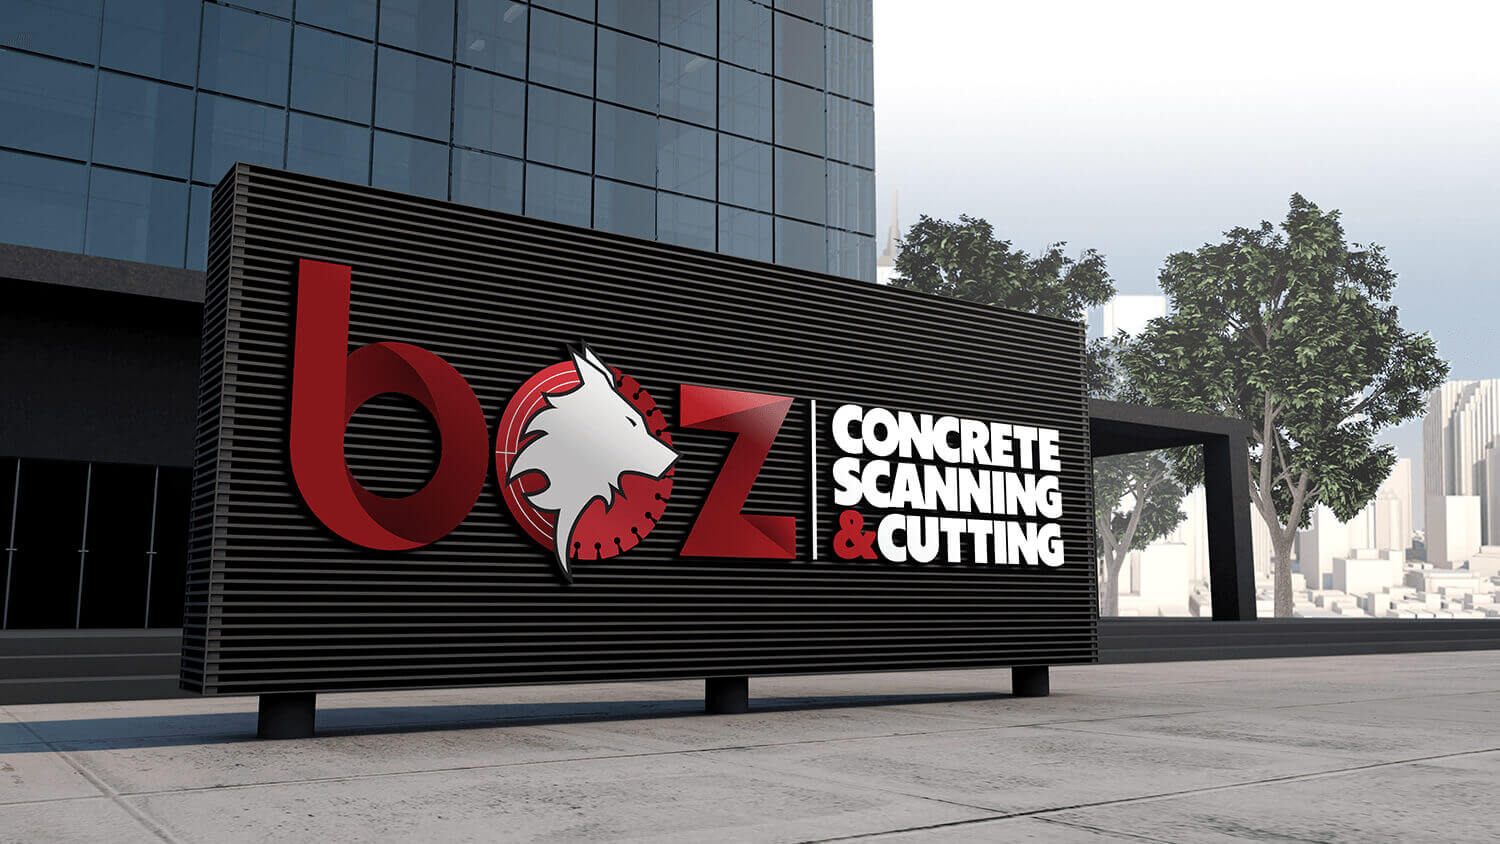 Mockup of BOZ Concrete Scanning & Cutting